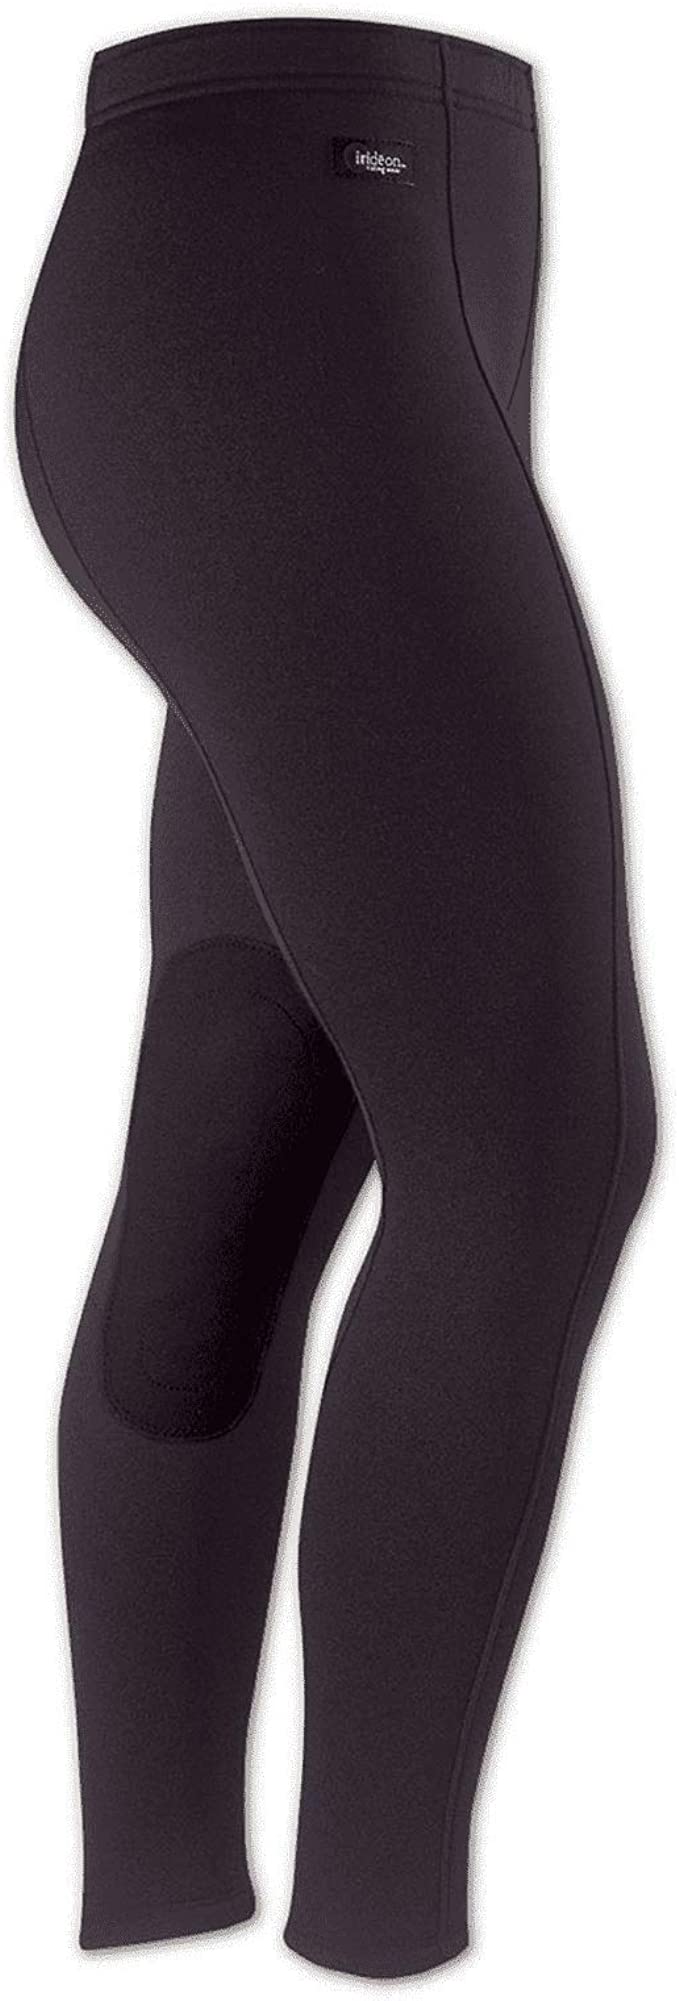 Graphite Irideon Power Stretch Women's Knee Patch Riding Breeches